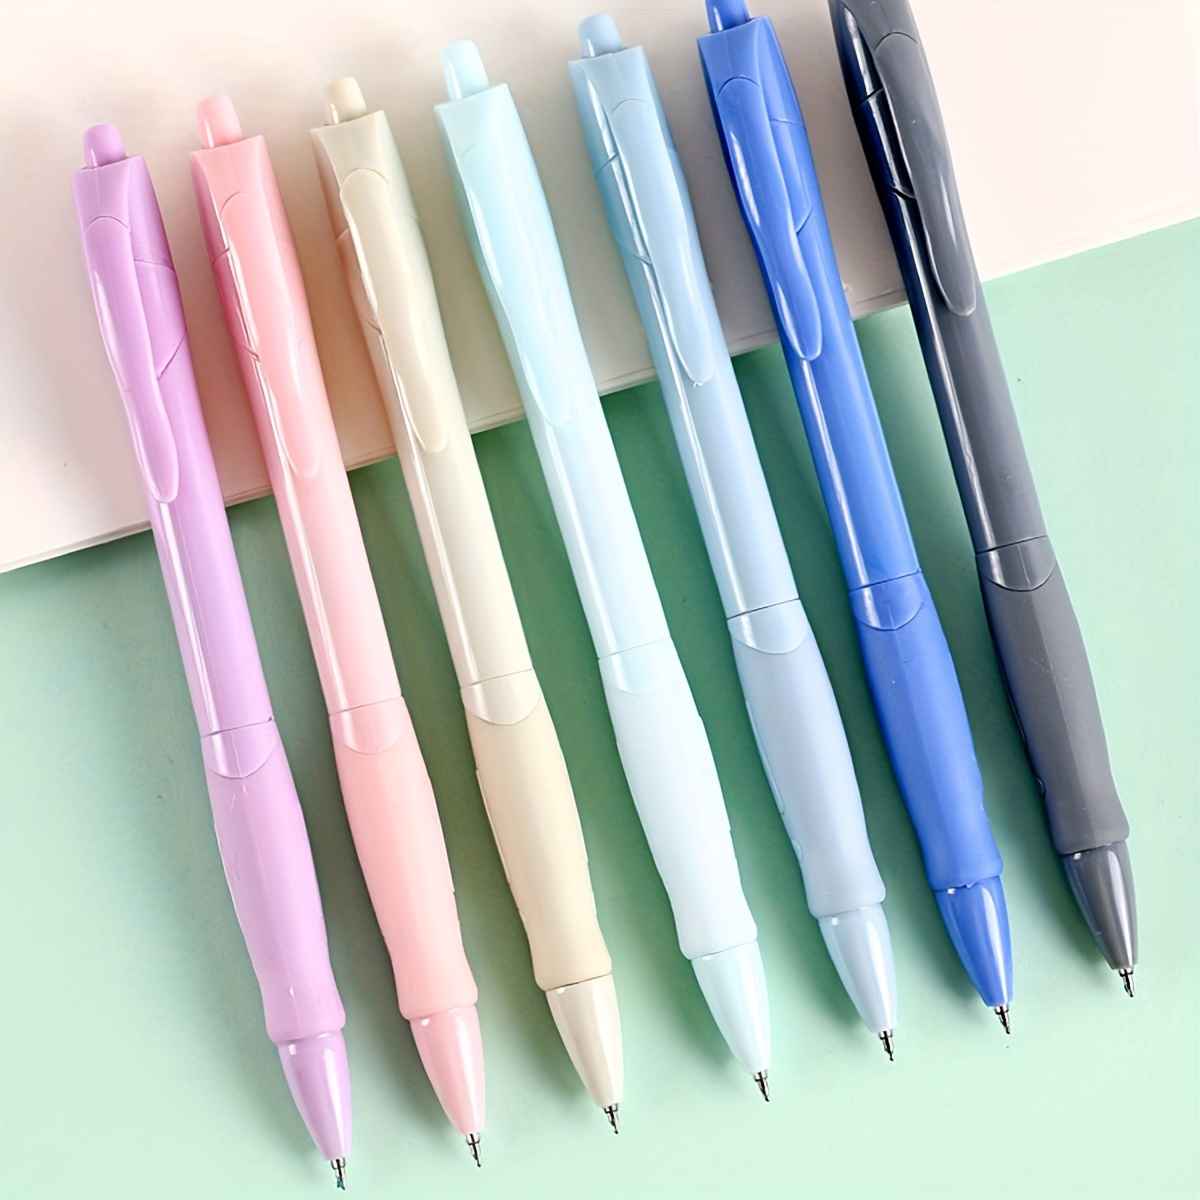 Black Ballpoint Pen,Ballpoint Pen Point 0.5mm Ballpoint Pen for  Note,Retractable Journaling Pen Office School Supplies,1ml Capacity, 6  Count 